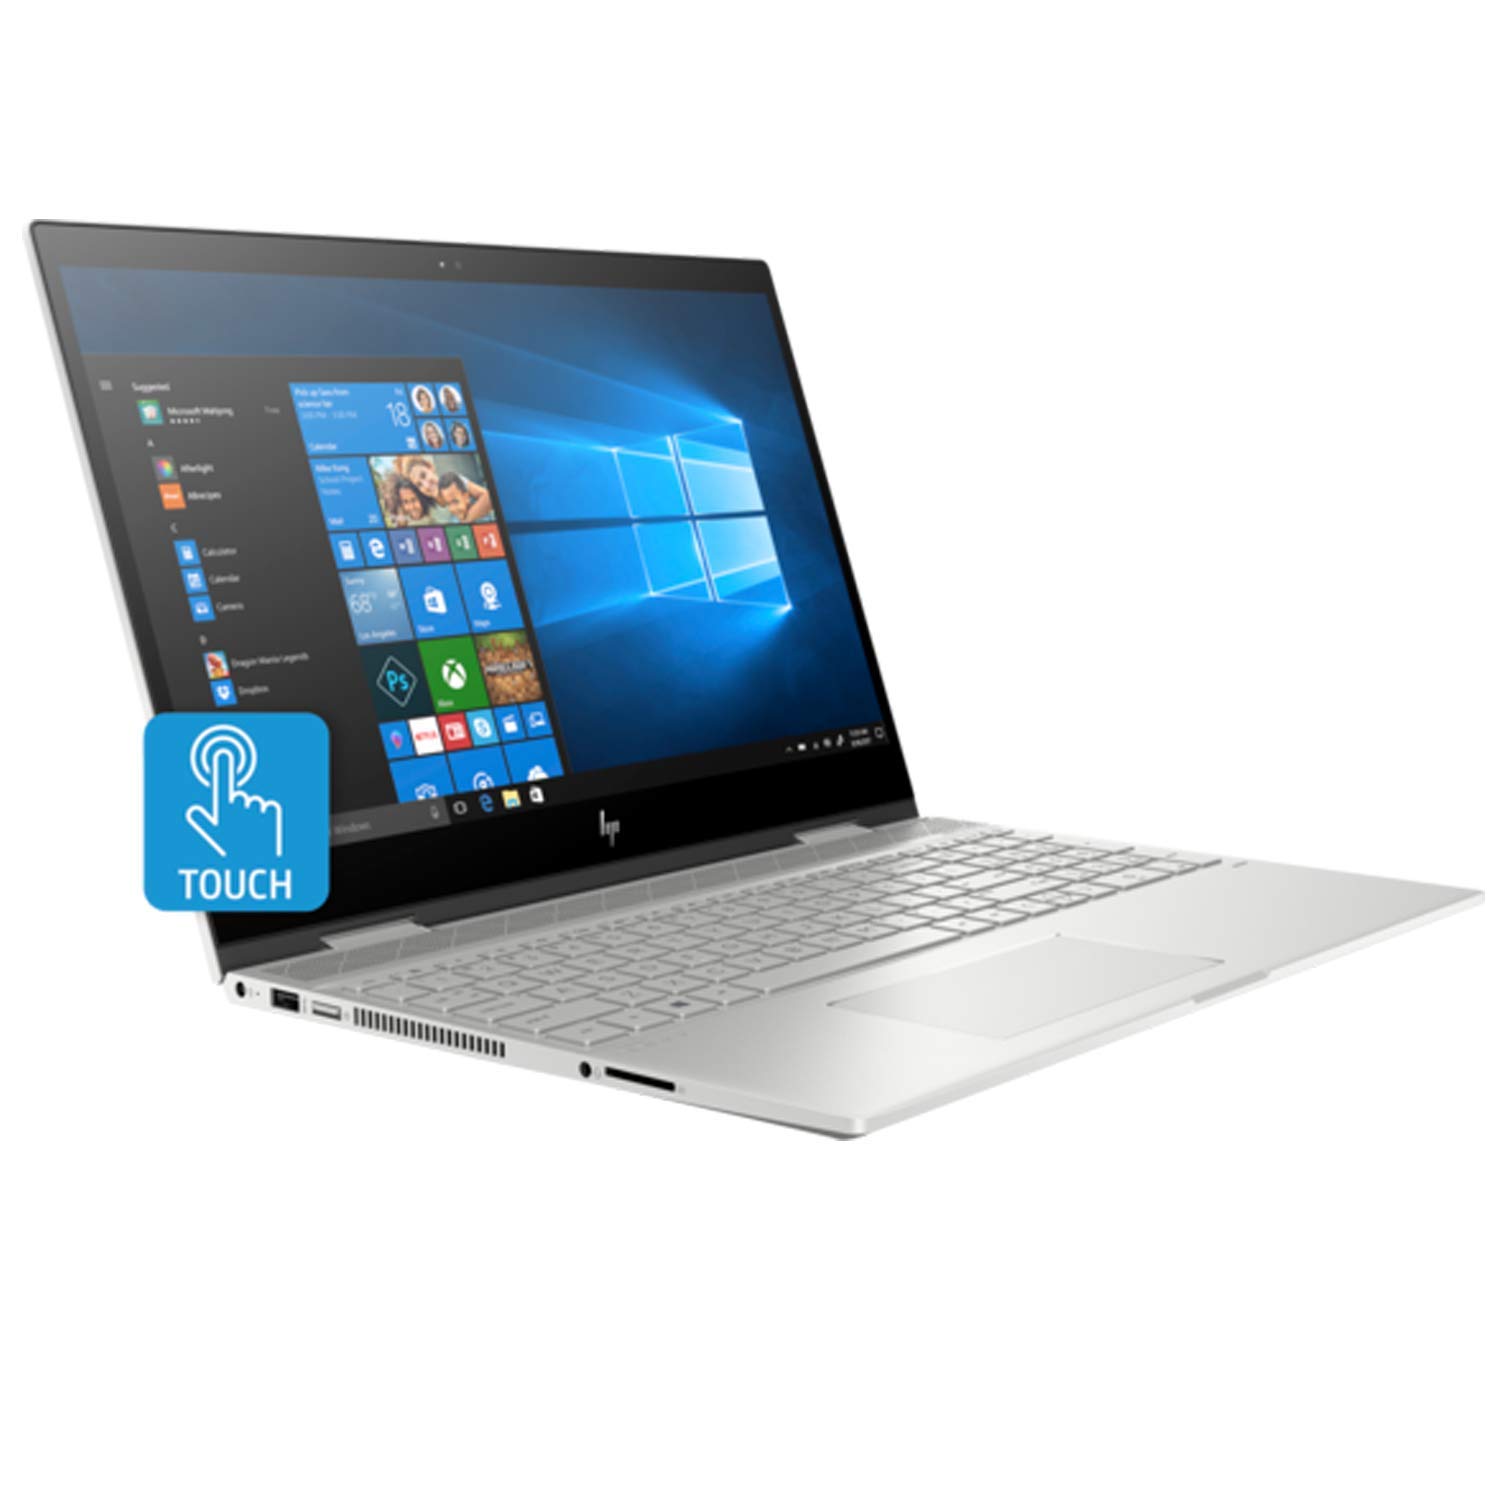 Touchscreen 156 Hp Envy X360 15t 2 In 1 Laptop With 8th Gen Intel